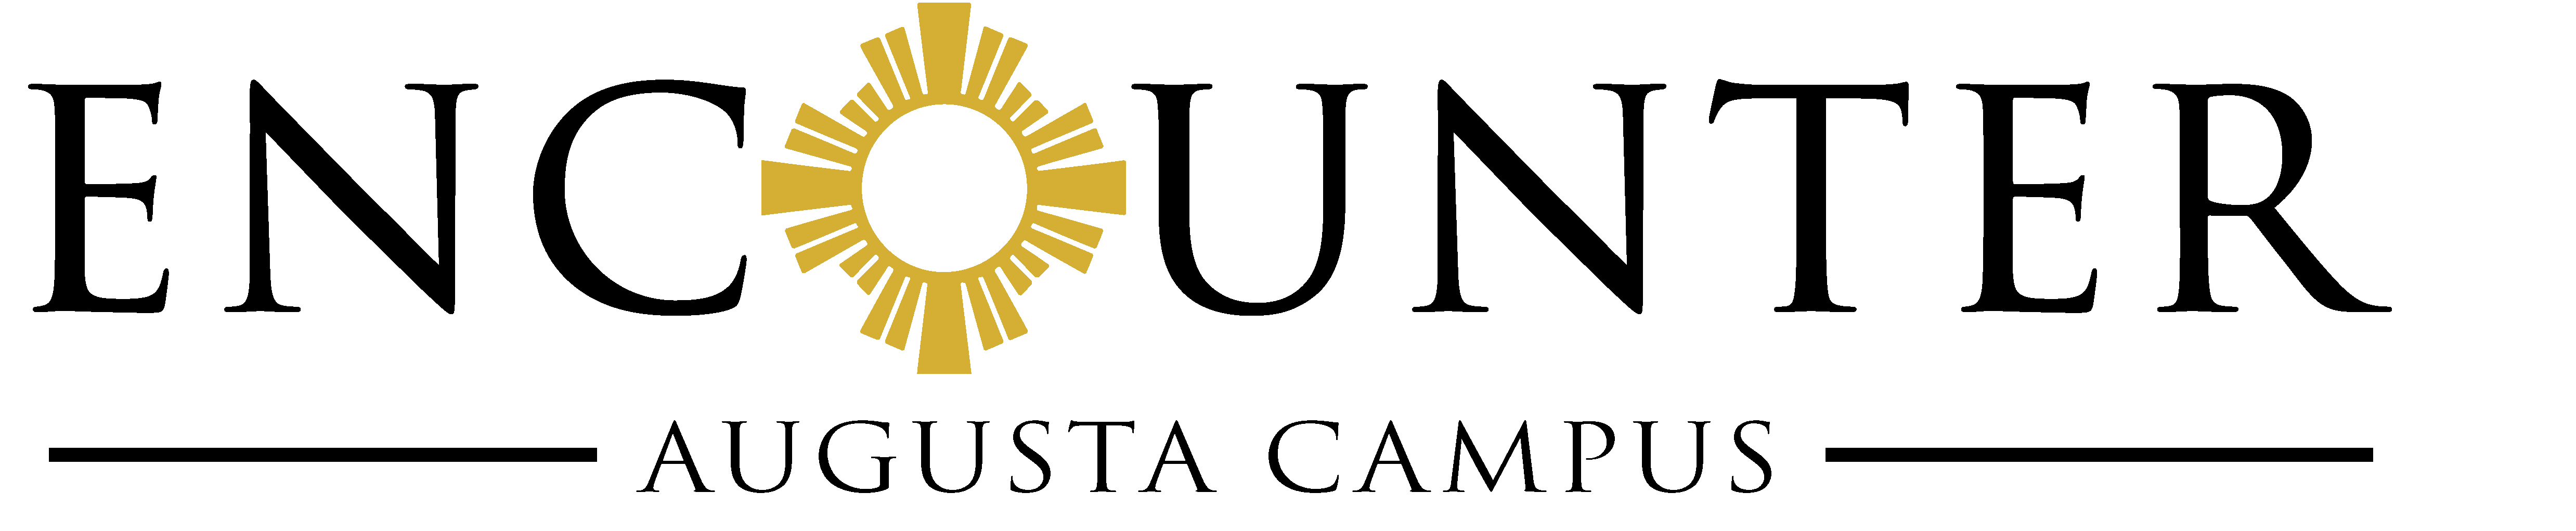 Encounter School of Ministry Augusta logo